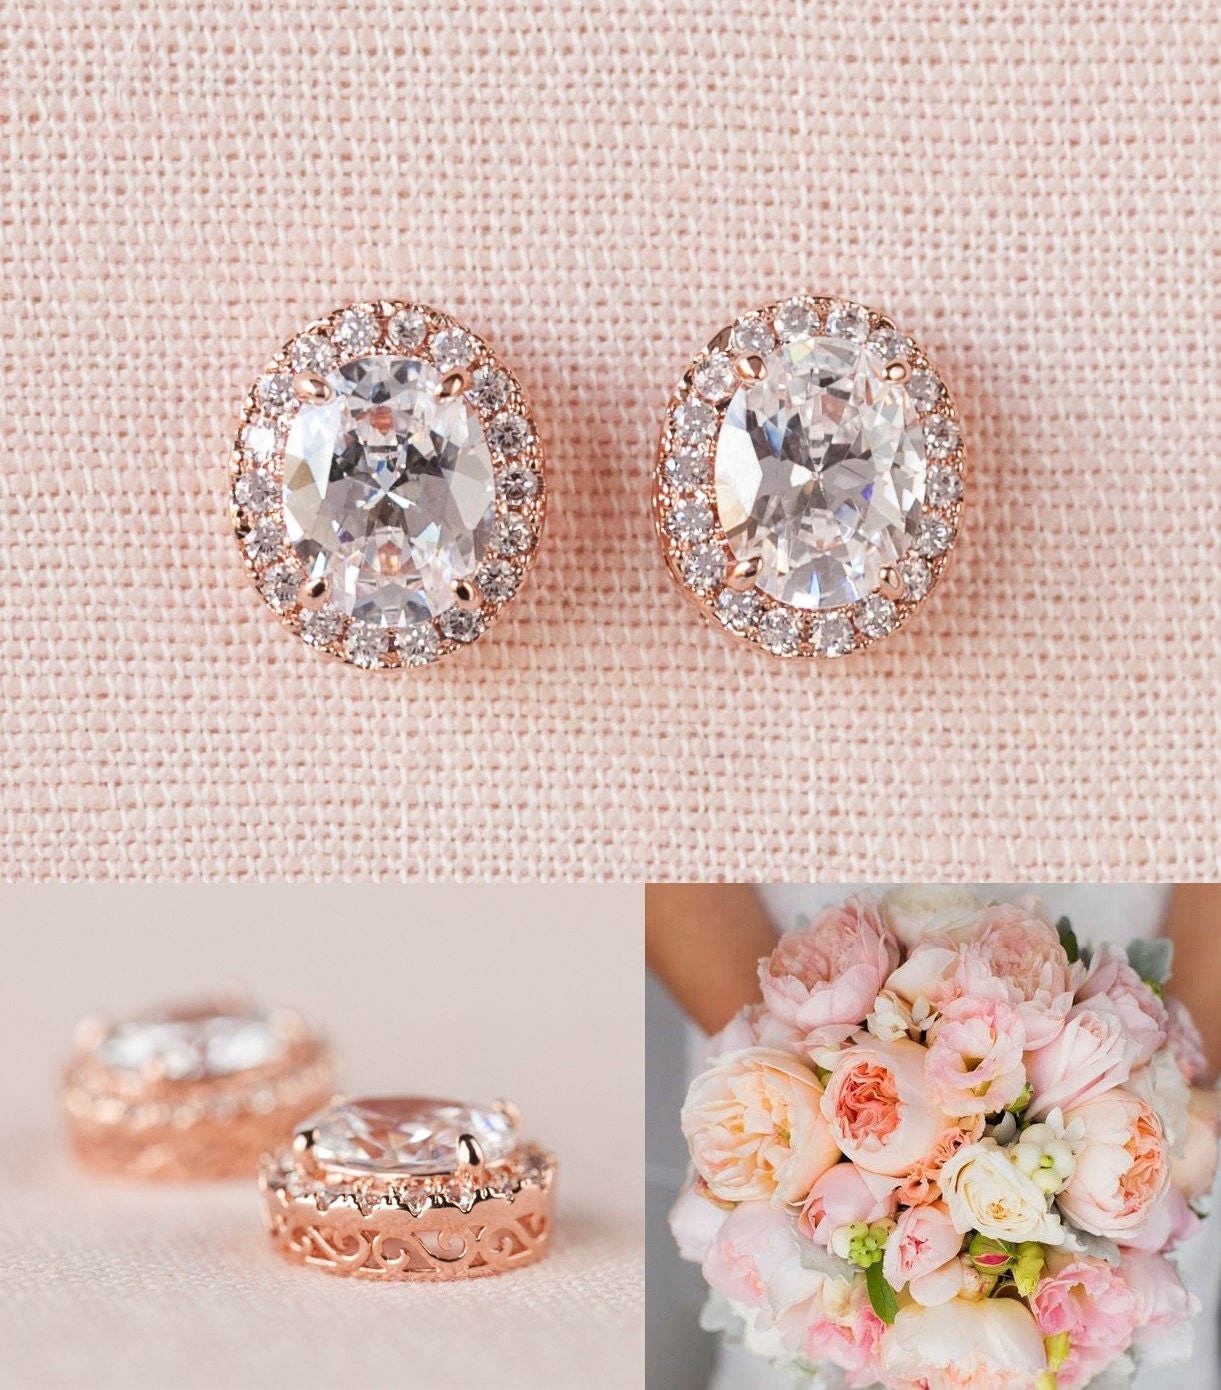 Rose Gold Bridal Earrings, Oval Stud Wedding Earrings, CLIP-ON Earrings, Bridesmaid jewelry Wedding jewelry, Oval Crystal Stud earrings